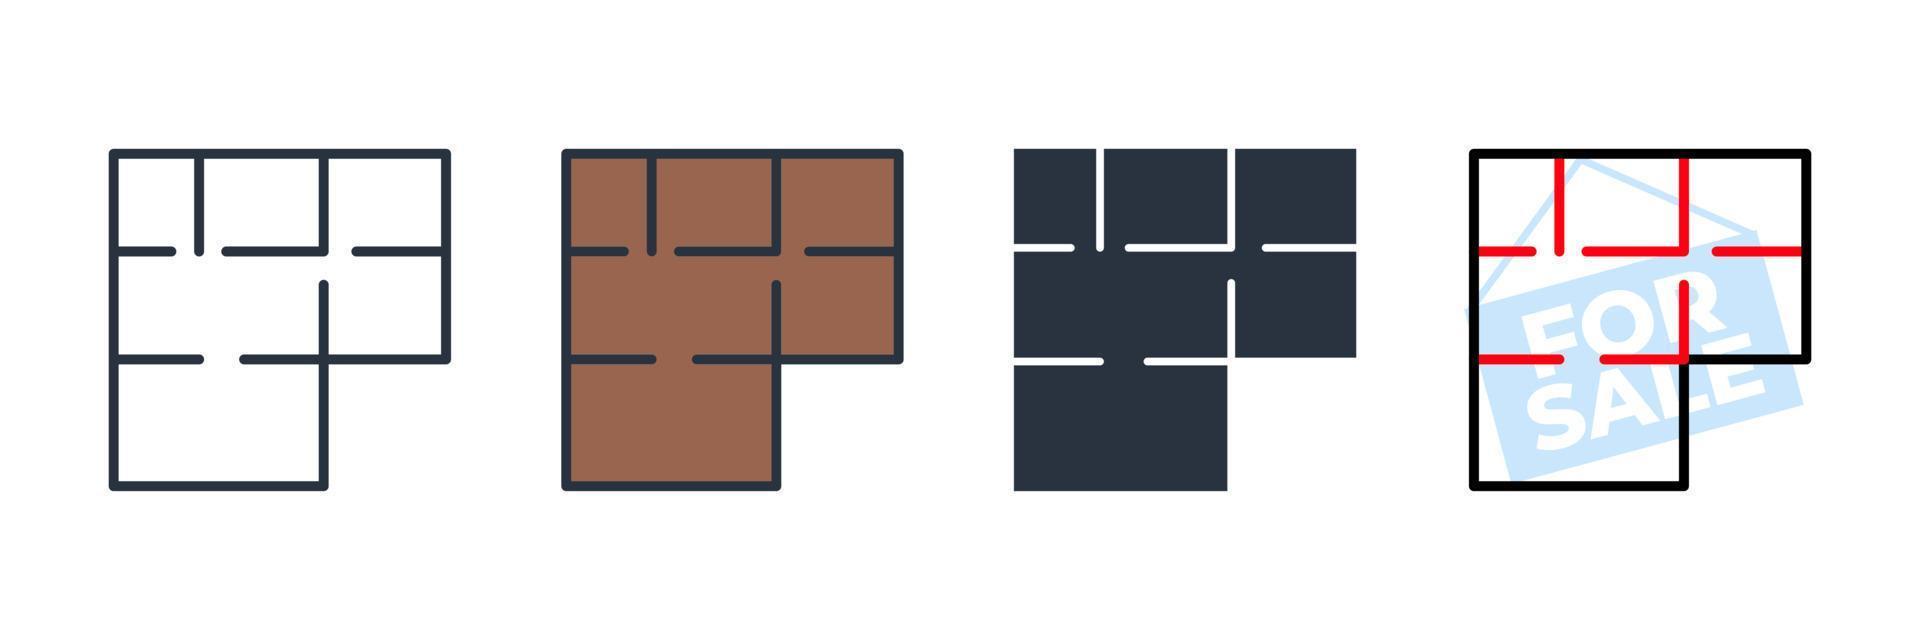 Hausplan-Symbol-Logo-Vektor-Illustration. Grundriss-Symbolvorlage für Grafik- und Webdesign-Sammlung vektor